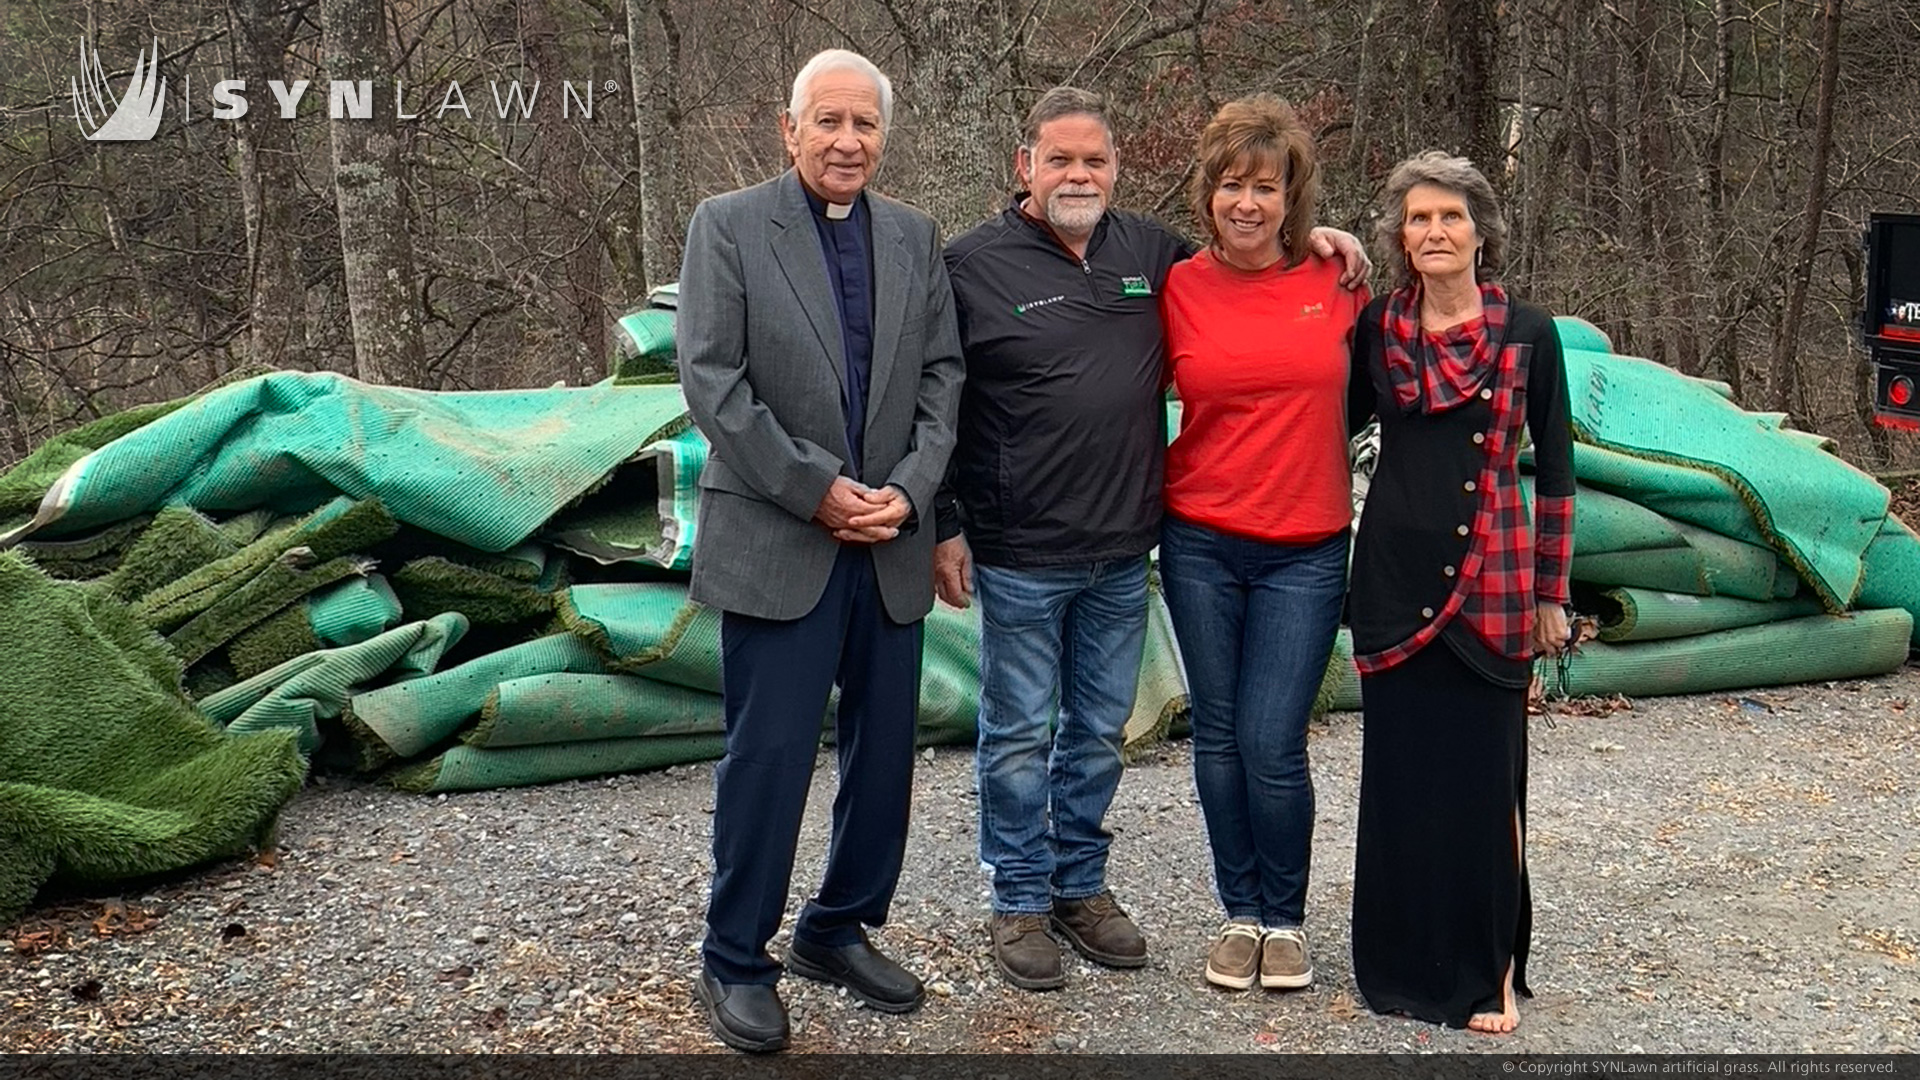 SYNLawn Carolina Donates Artificial Turf to Native American Community